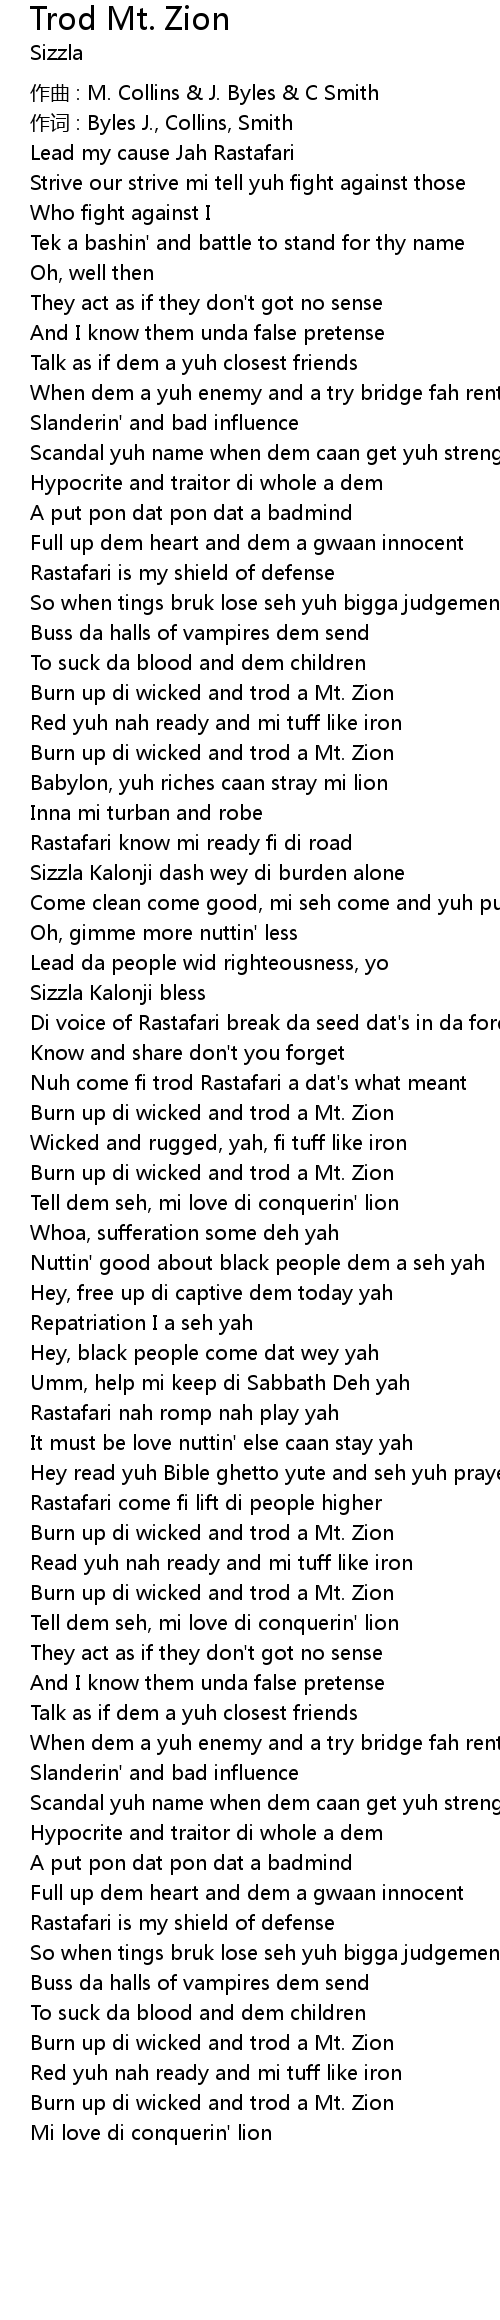 Trod Mt. Zion Lyrics